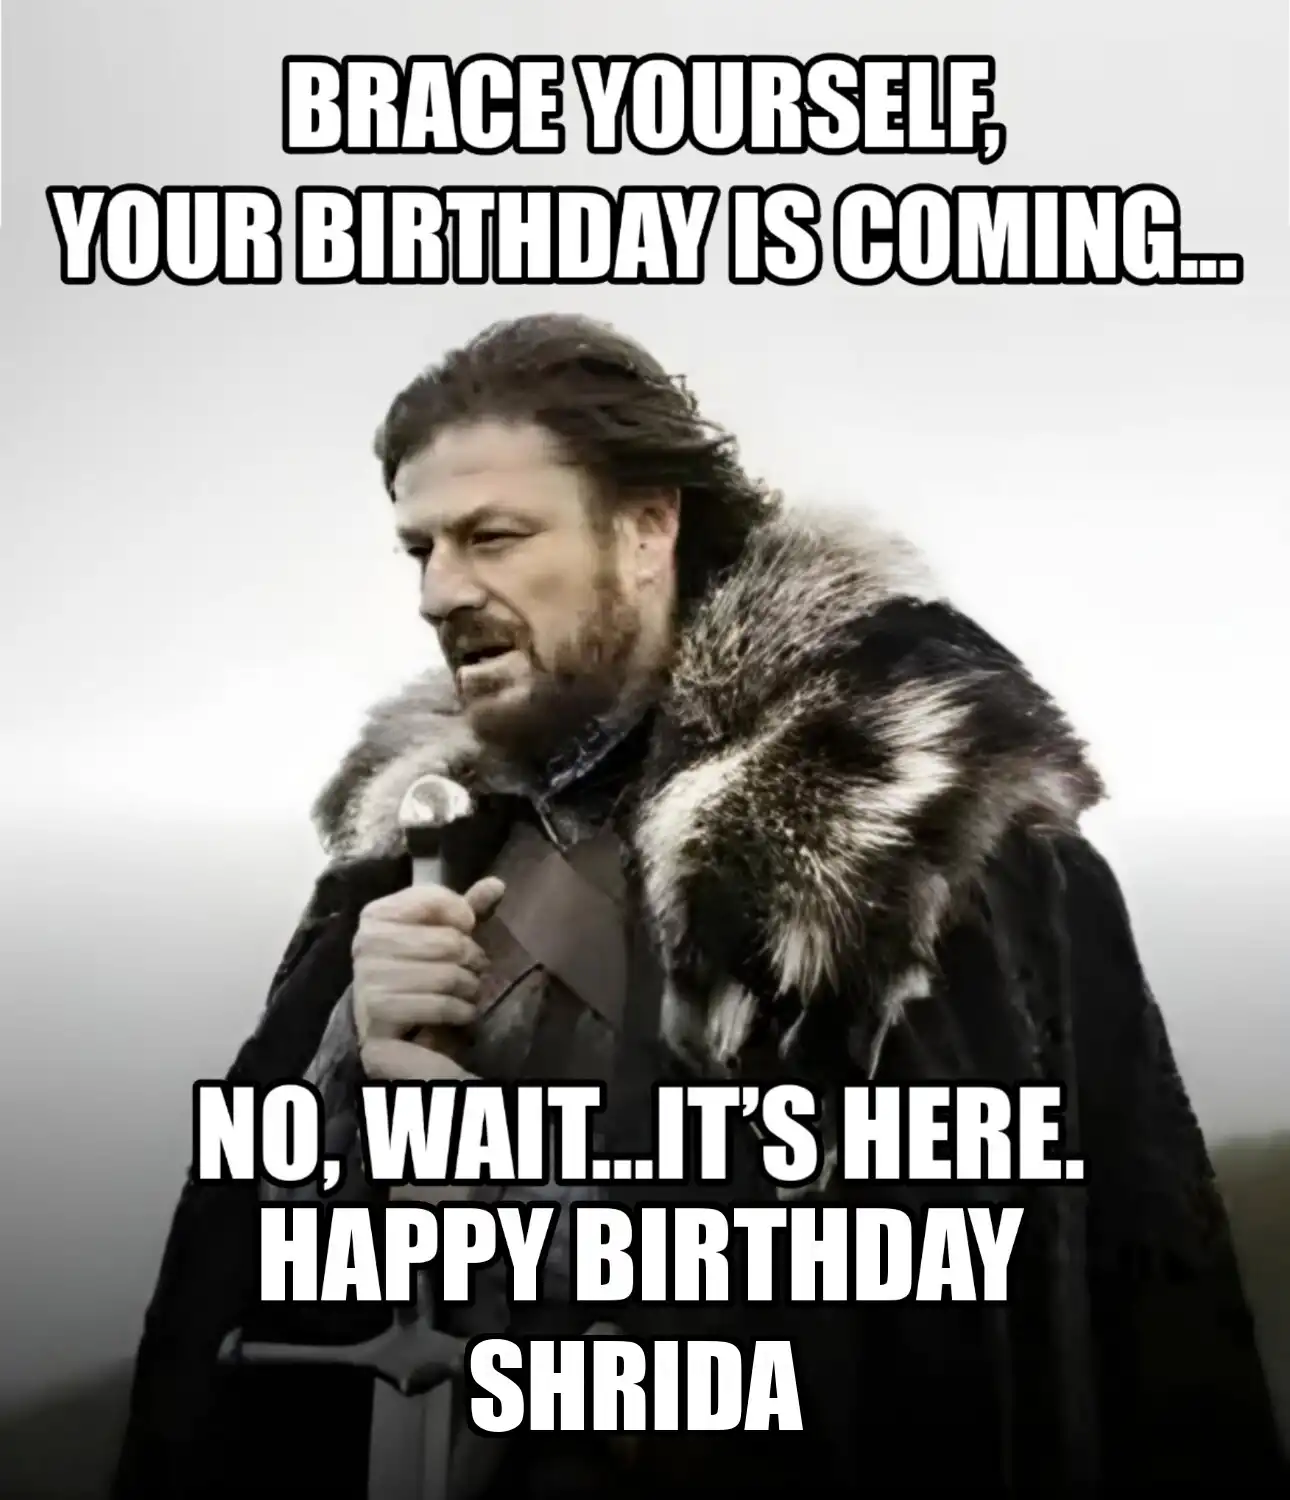 Happy Birthday Shrida Brace Yourself Your Birthday Is Coming Meme